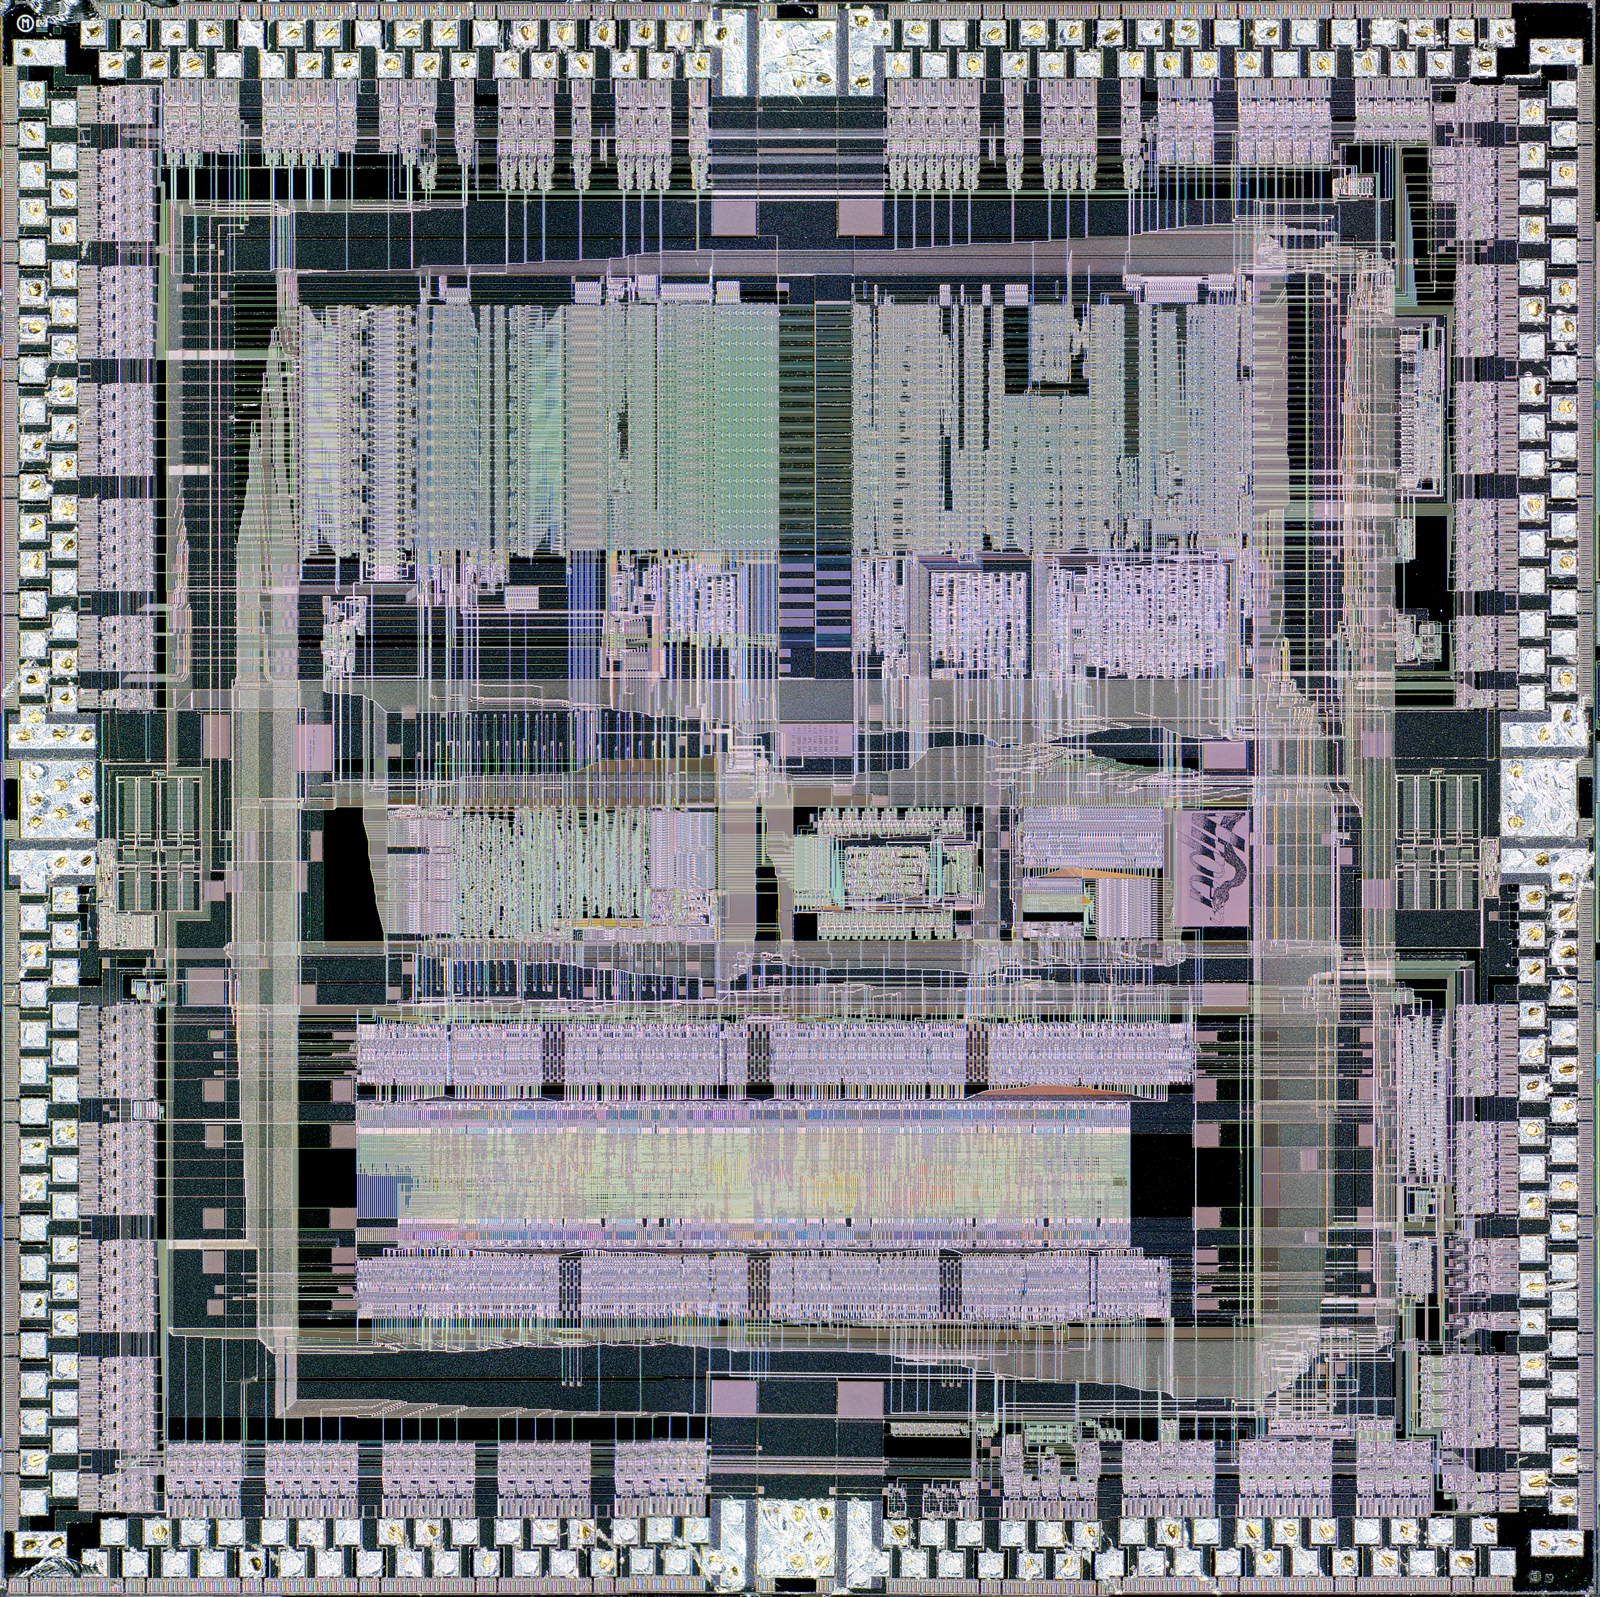 bercovici:hp:1fz6-0006-viper-memory-controller:mz.jpg